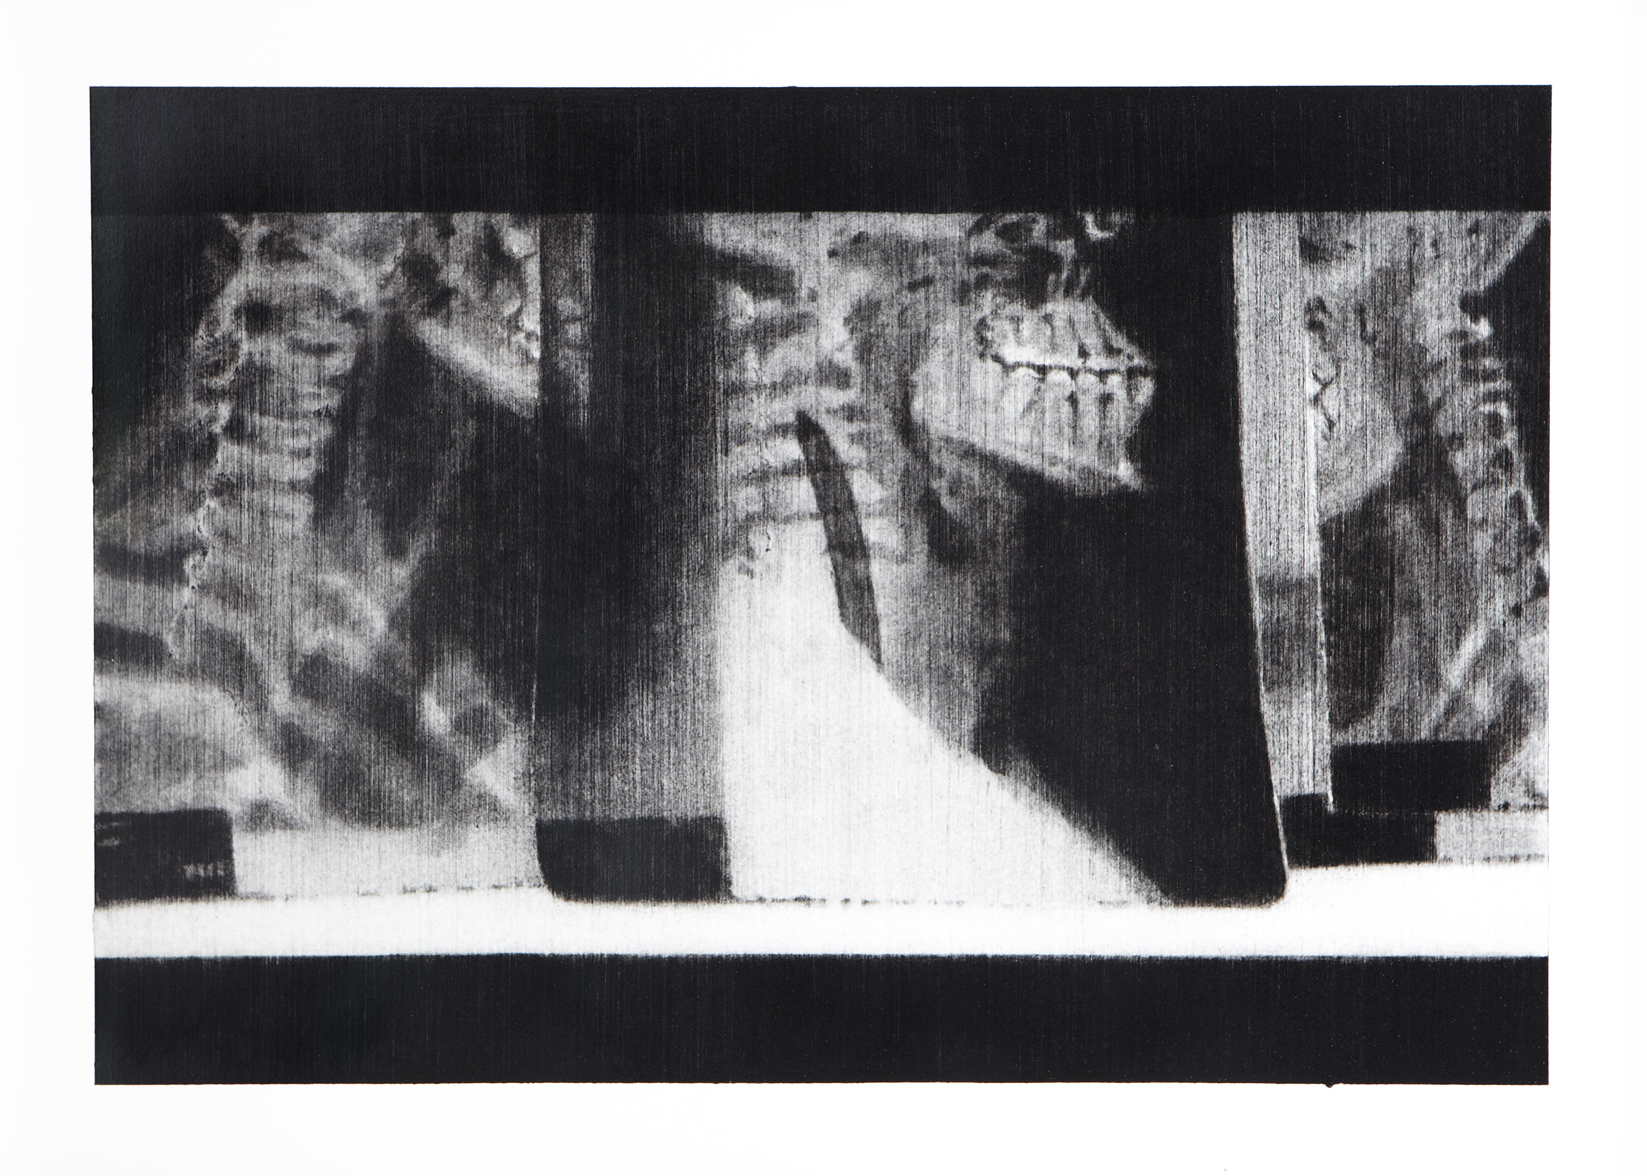    Anterior Laryngial Sac . 2012.&nbsp;Charcoal on paper. 35 x 48cm.  